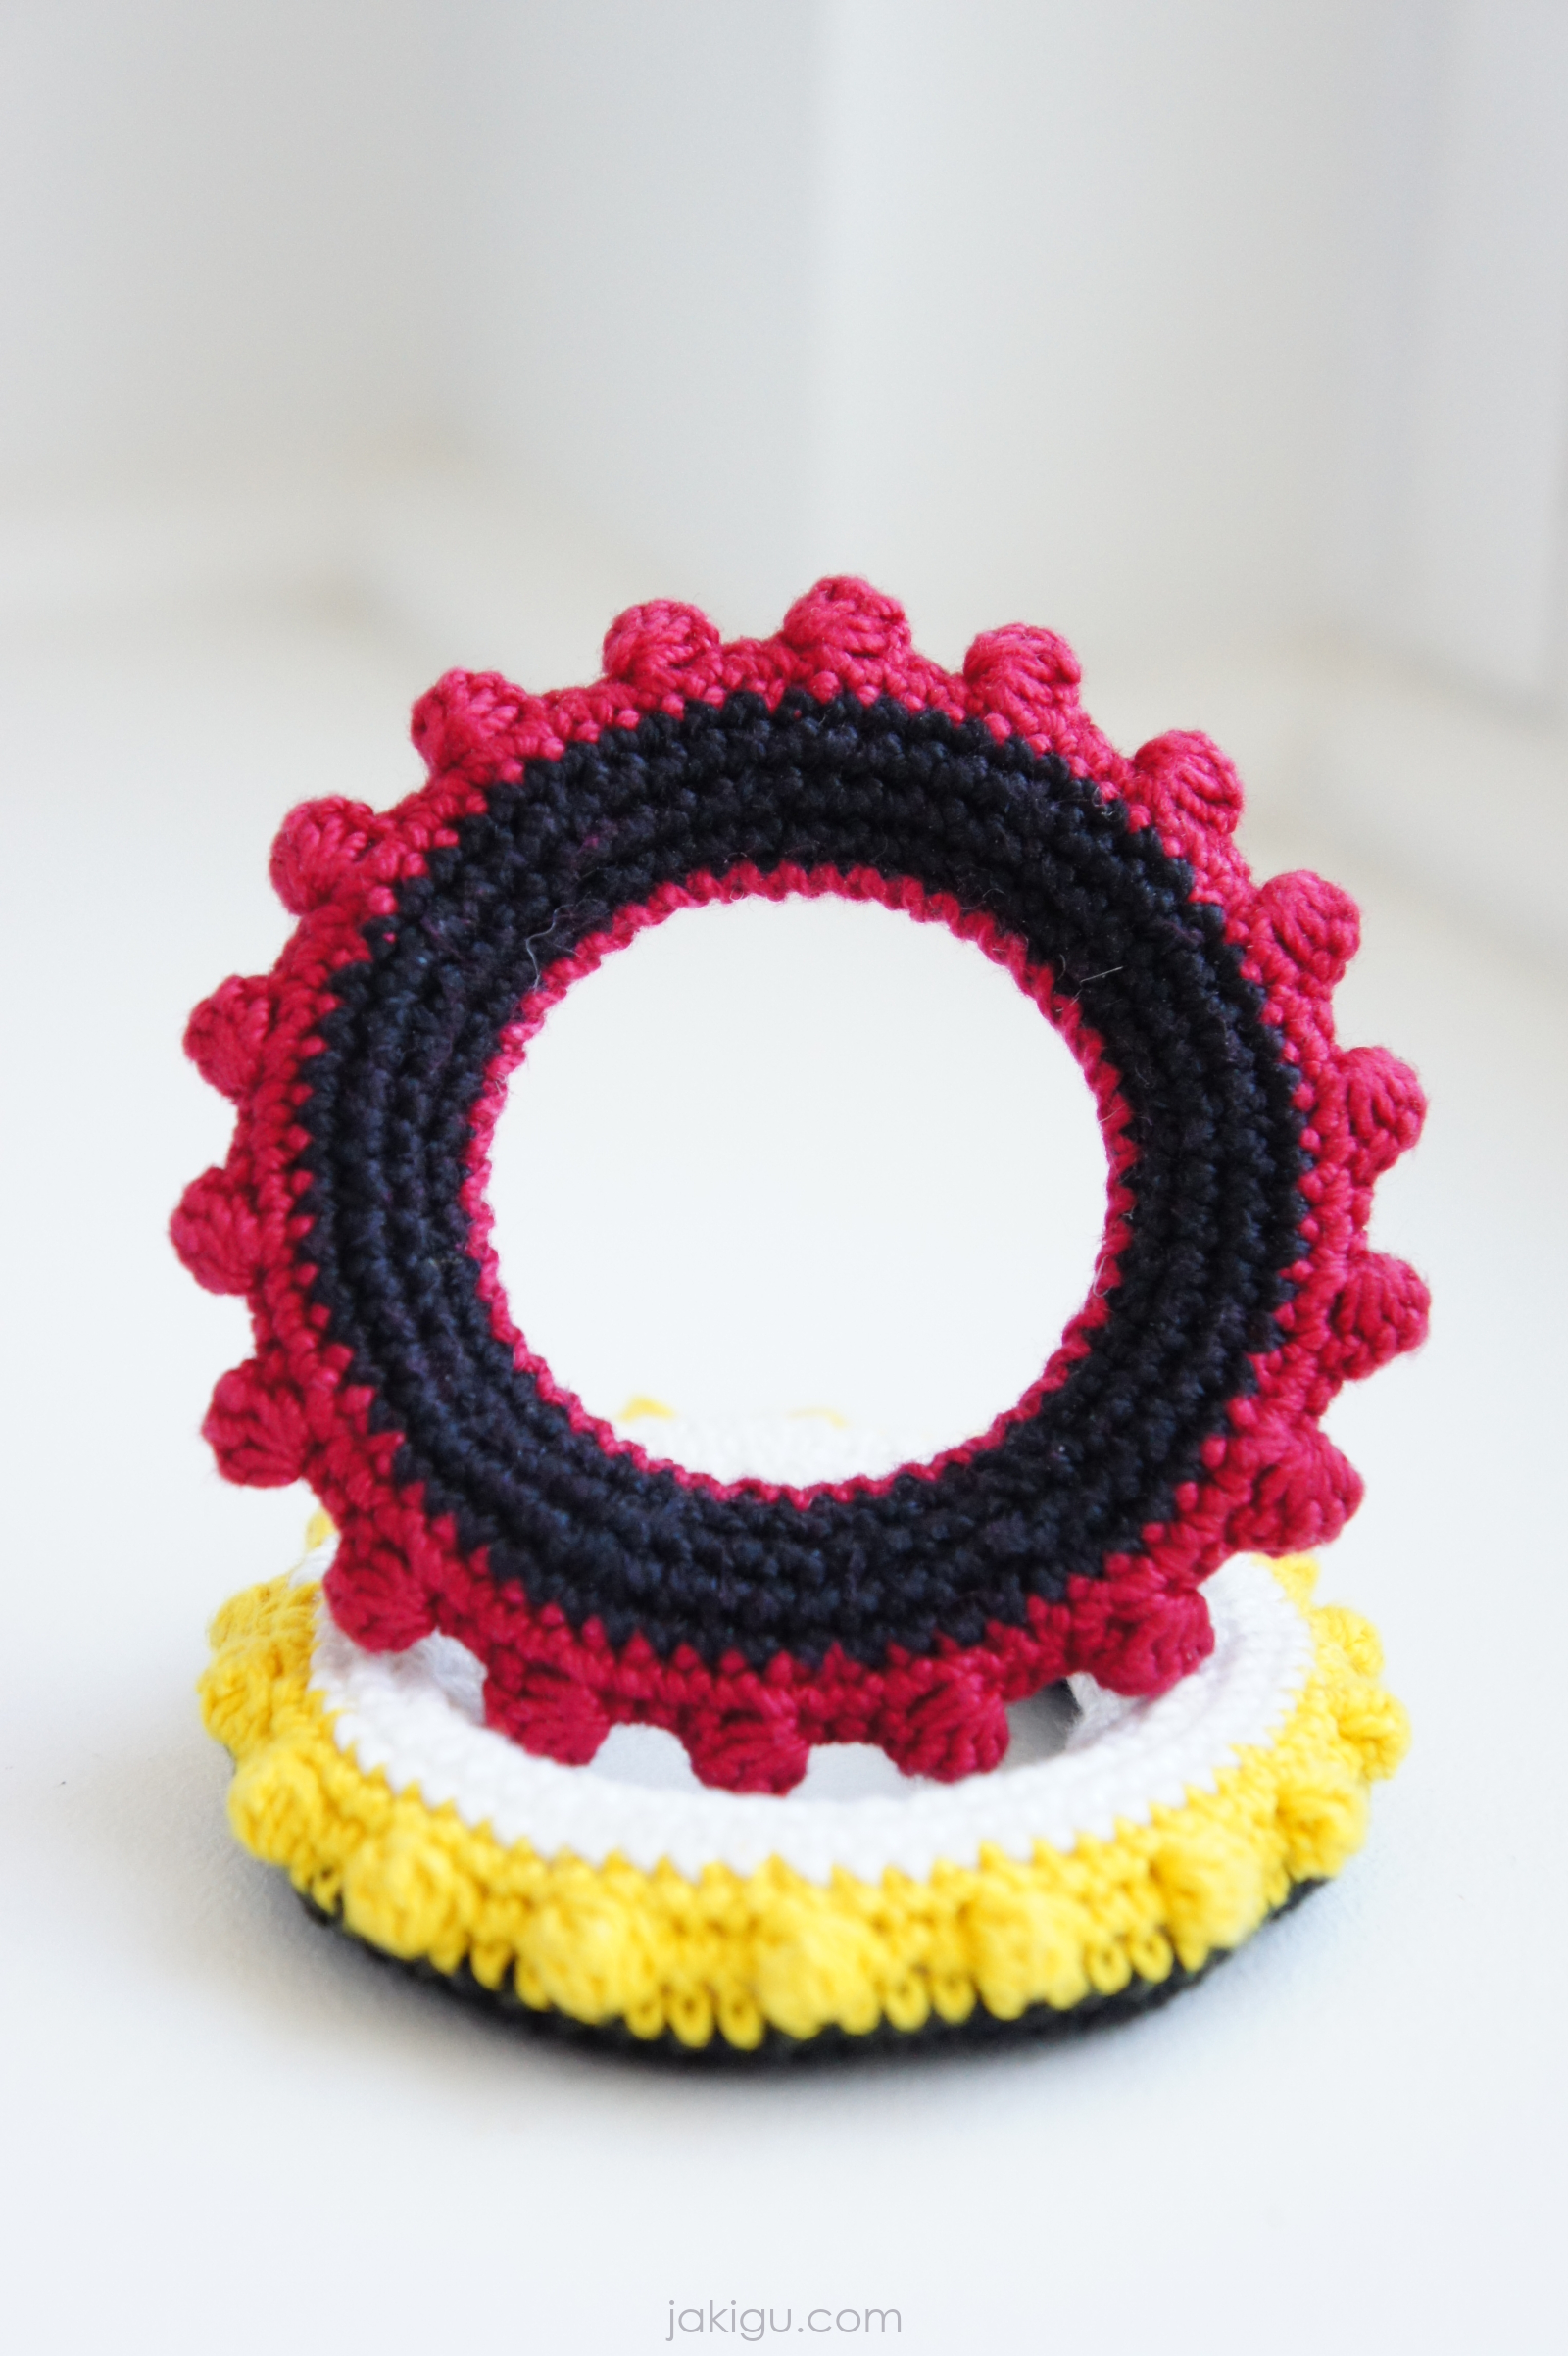 Tactile Toy | jakigu.com crochet pattern